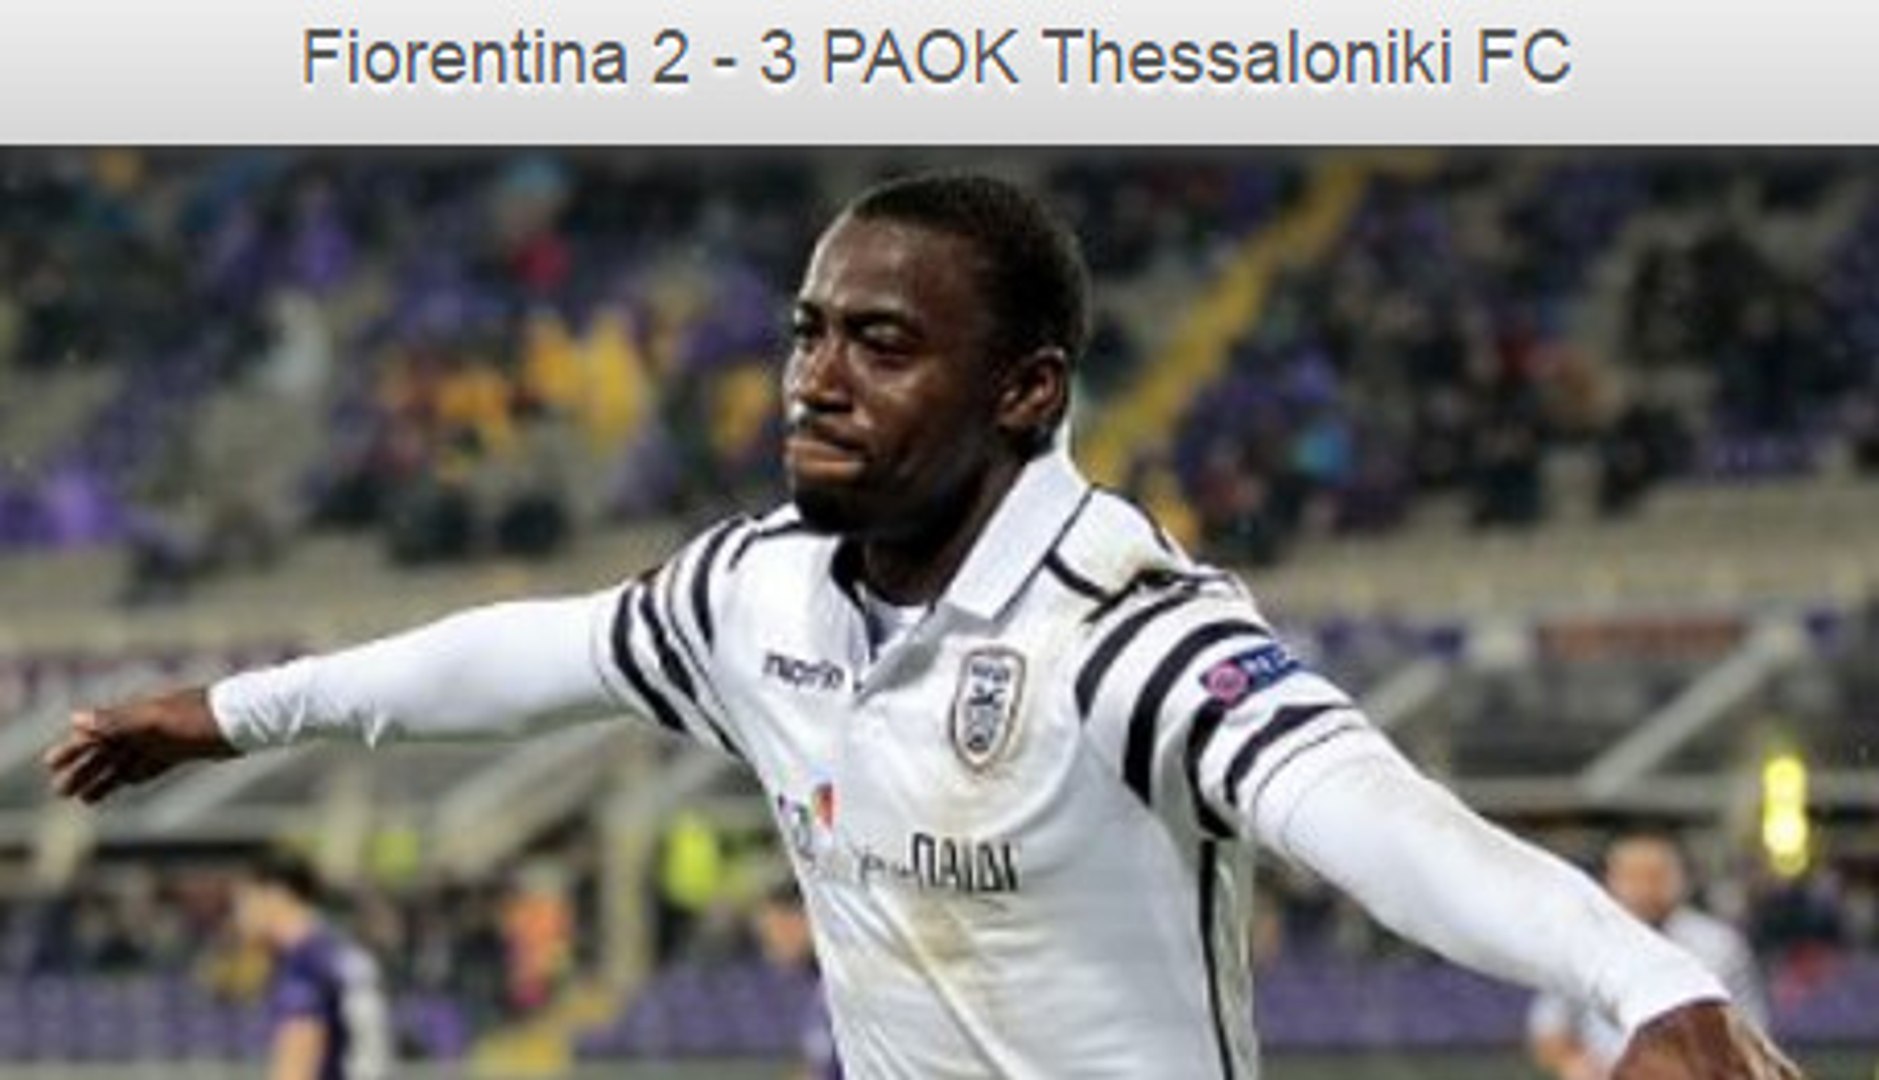 All Goals & highlights - Fiorentina 2-3 PAOK 24.11.2016 - Vidéo Dailymotion